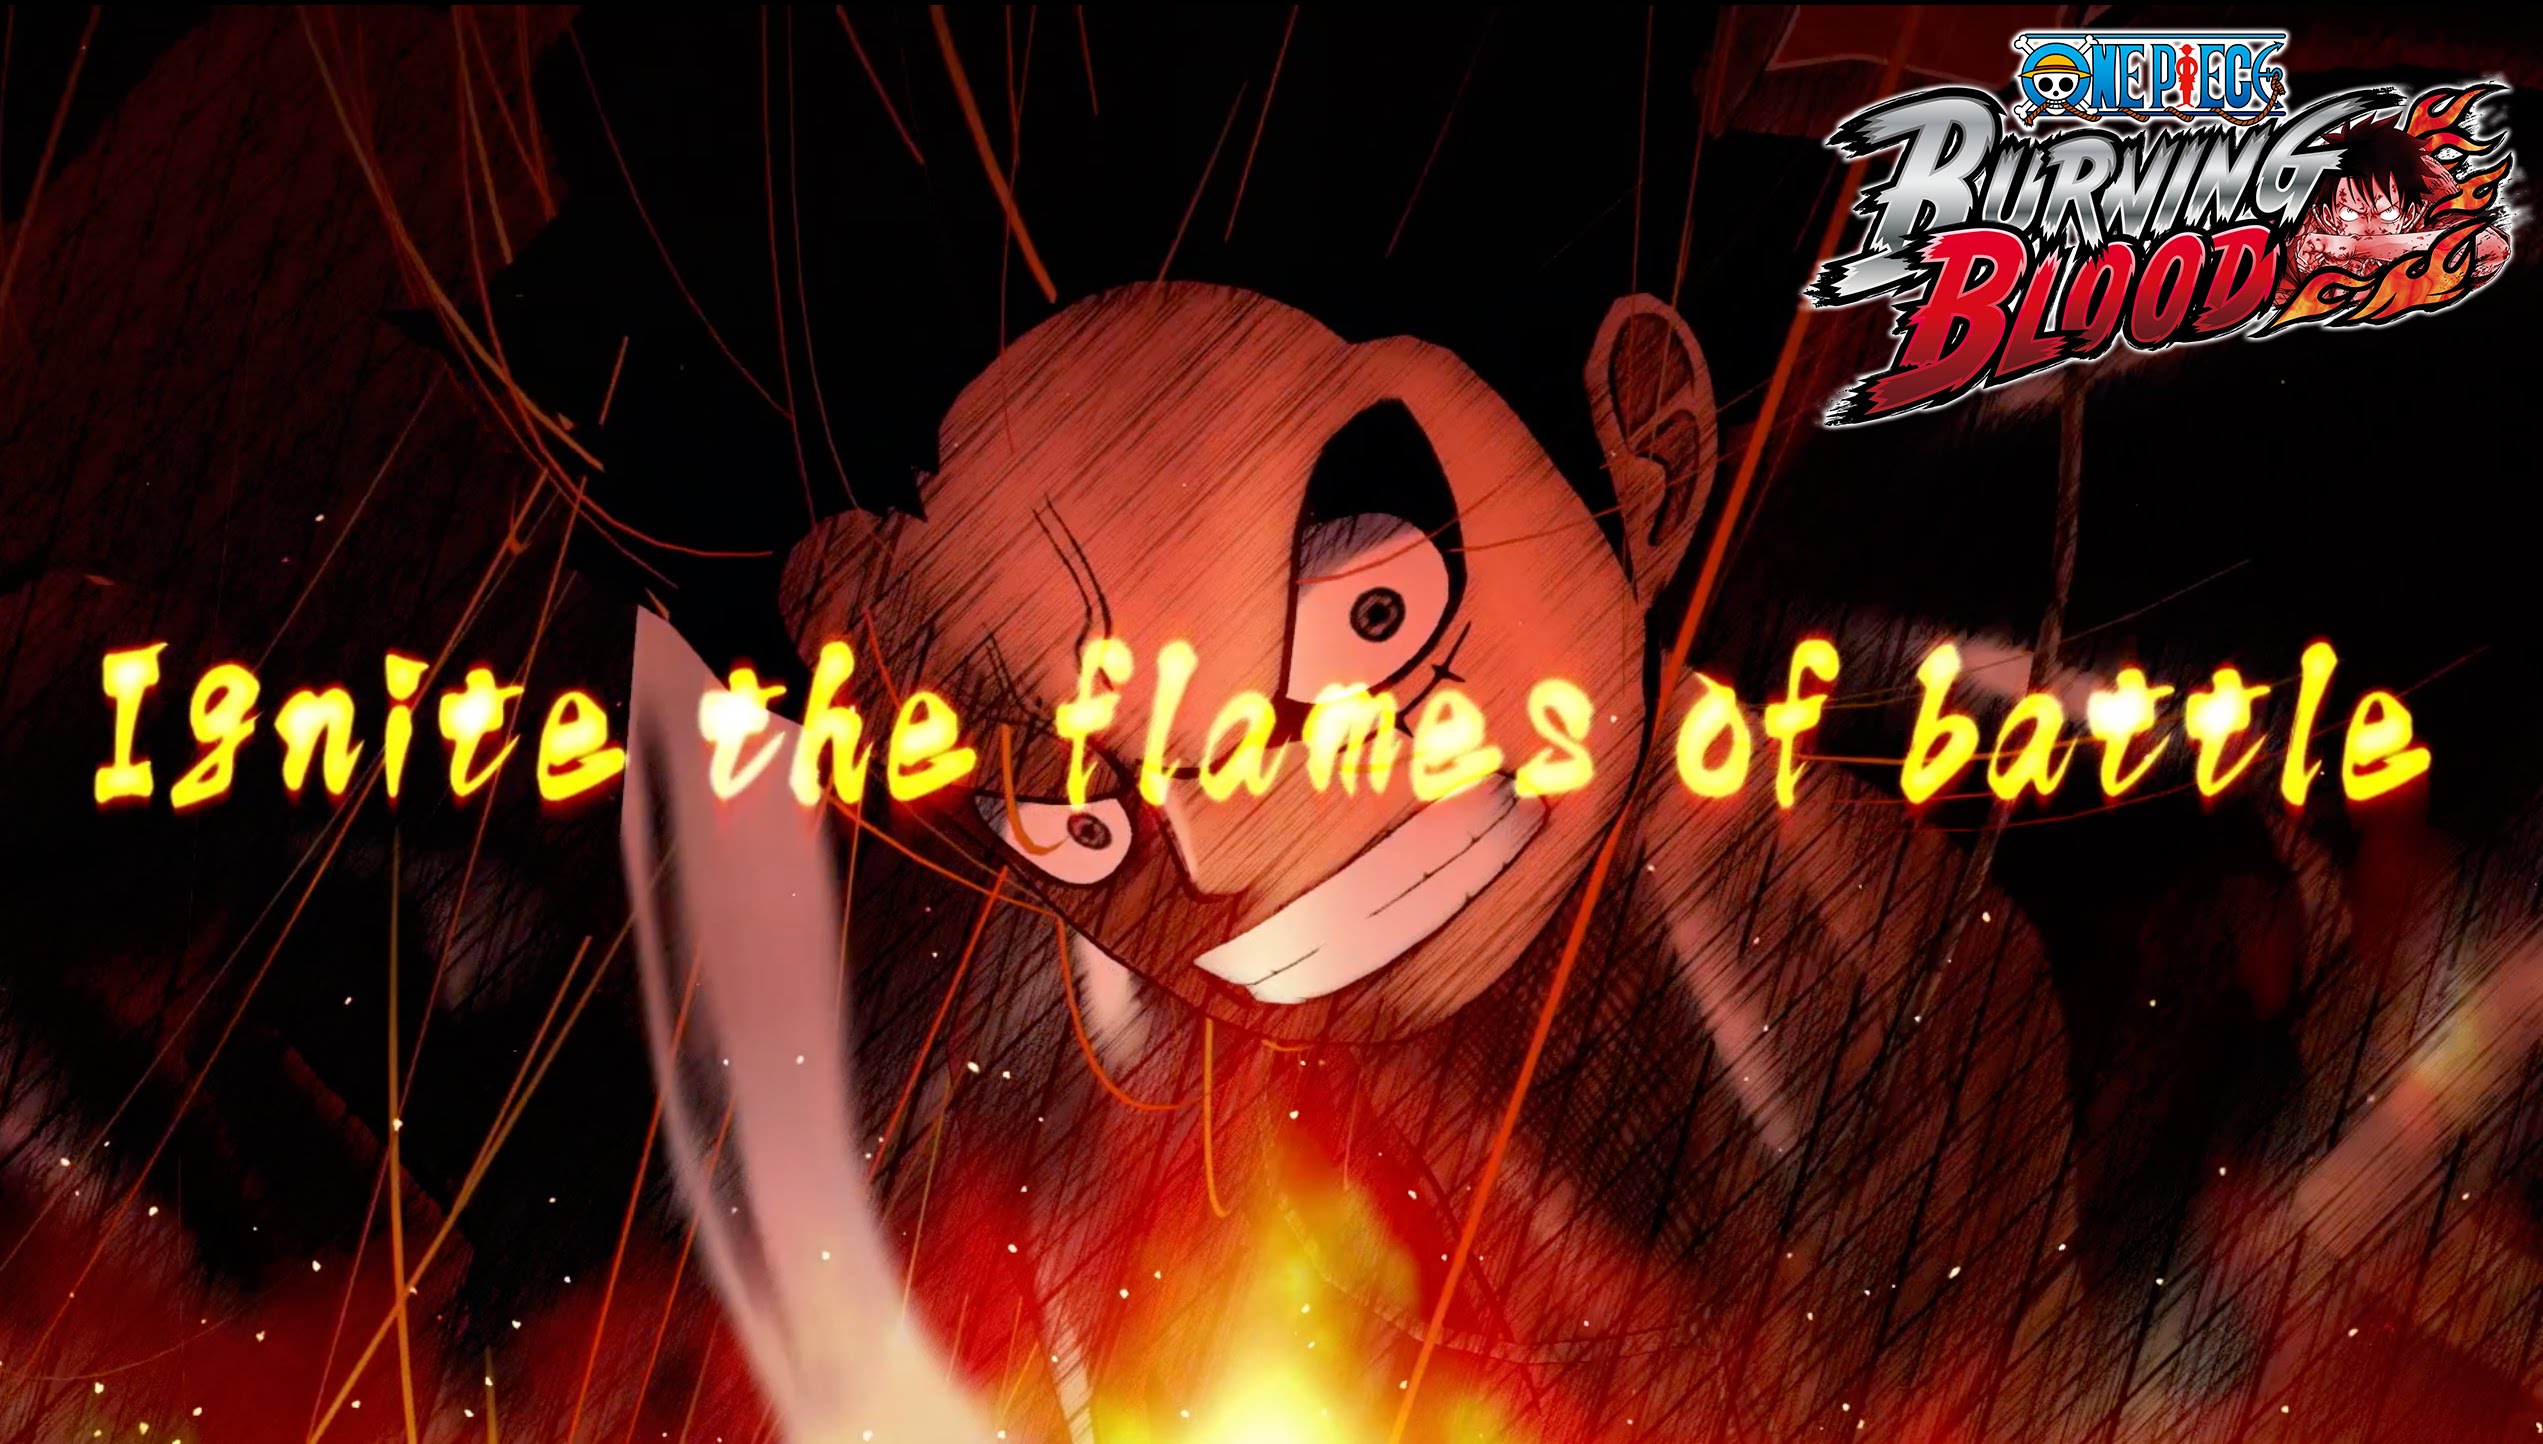 One Piece: Burning Blood - Pirate Flag Battle Trailer